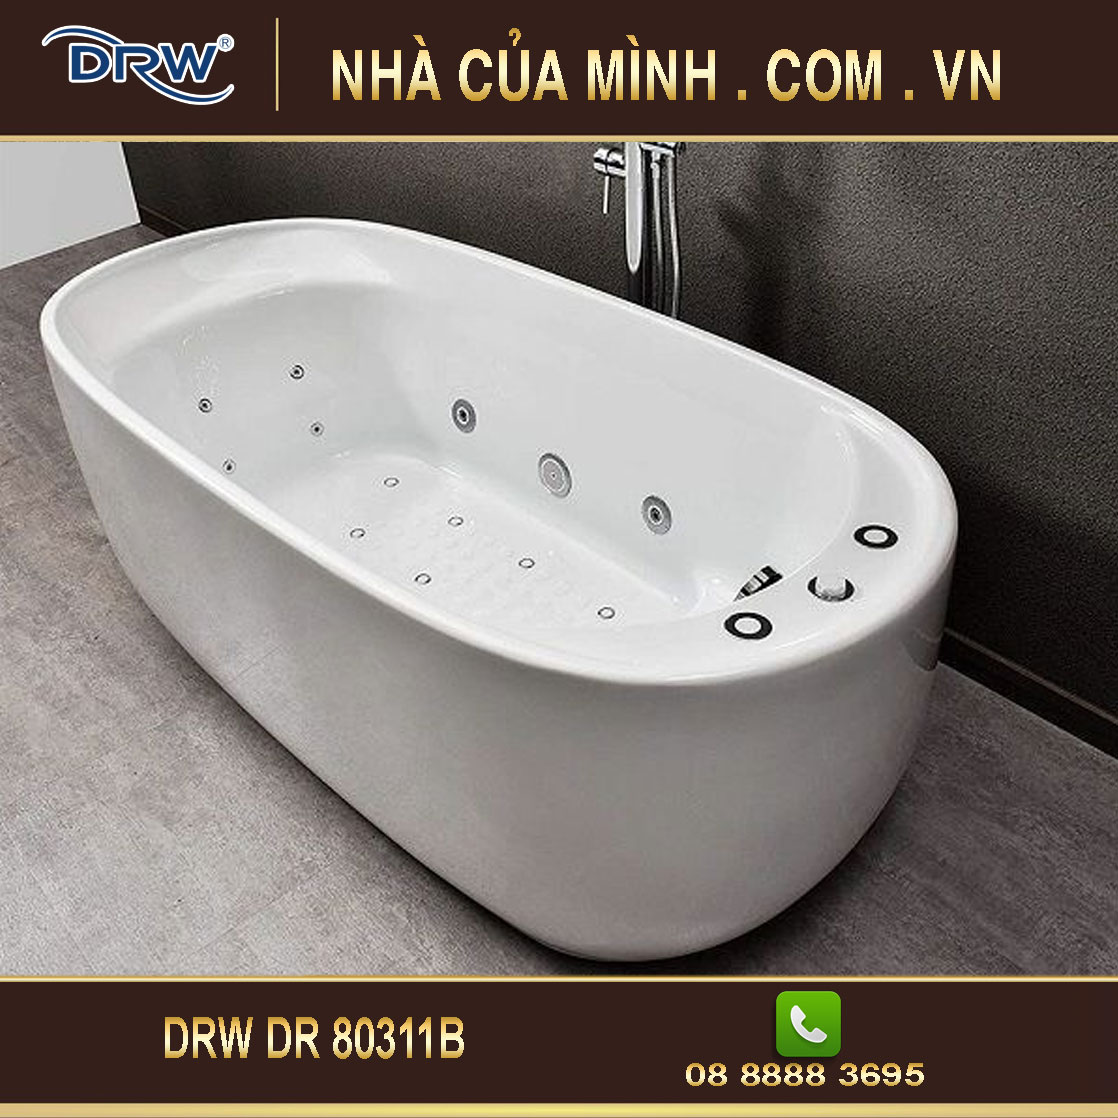 Bồn tắm Massage DRW DR 80311B cao cấp